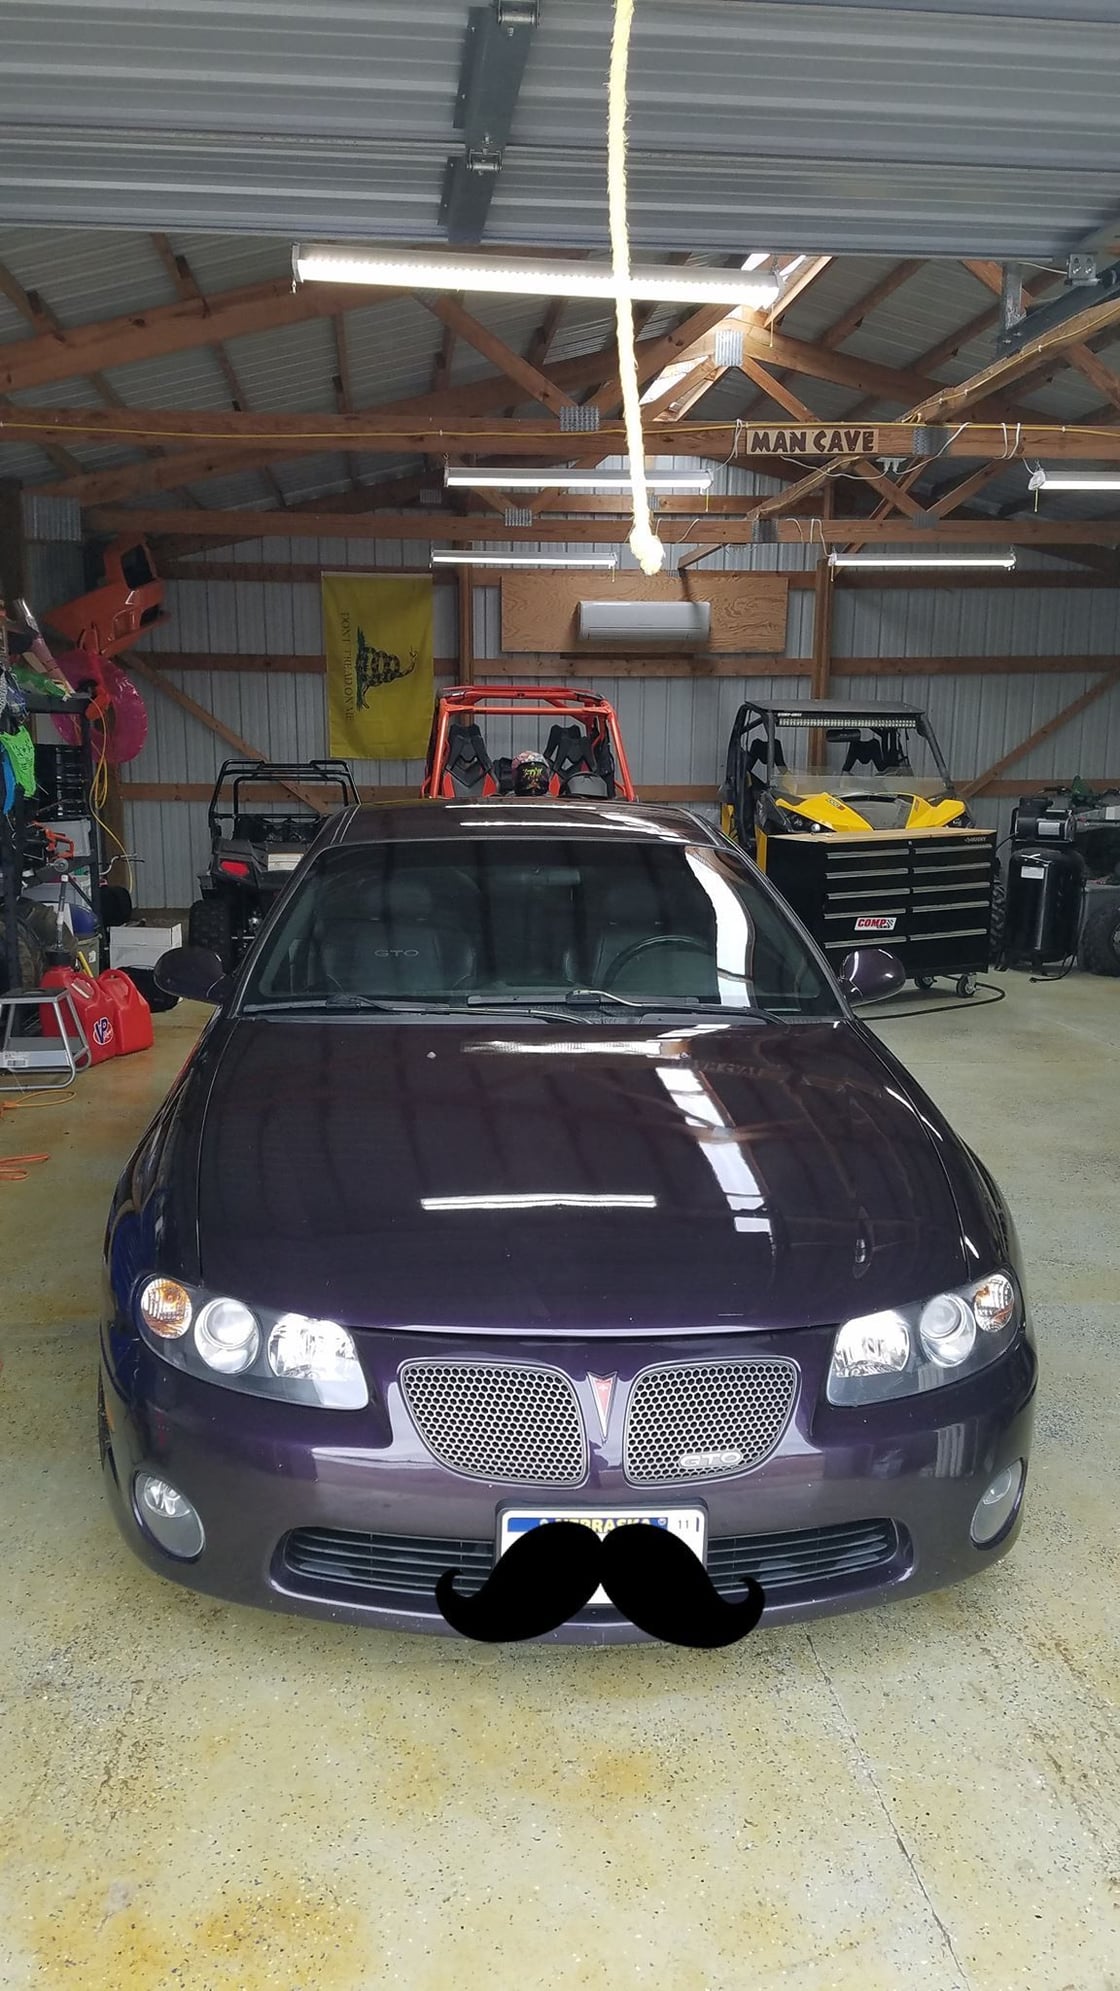 2004 Pontiac GTO - 2004 cosmos purple gto 6 speed - Used - VIN 6g2vx12g34l267565 - 75,000 Miles - 8 cyl - 2WD - Manual - Coupe - Purple - Grand Island, NE 68803, United States